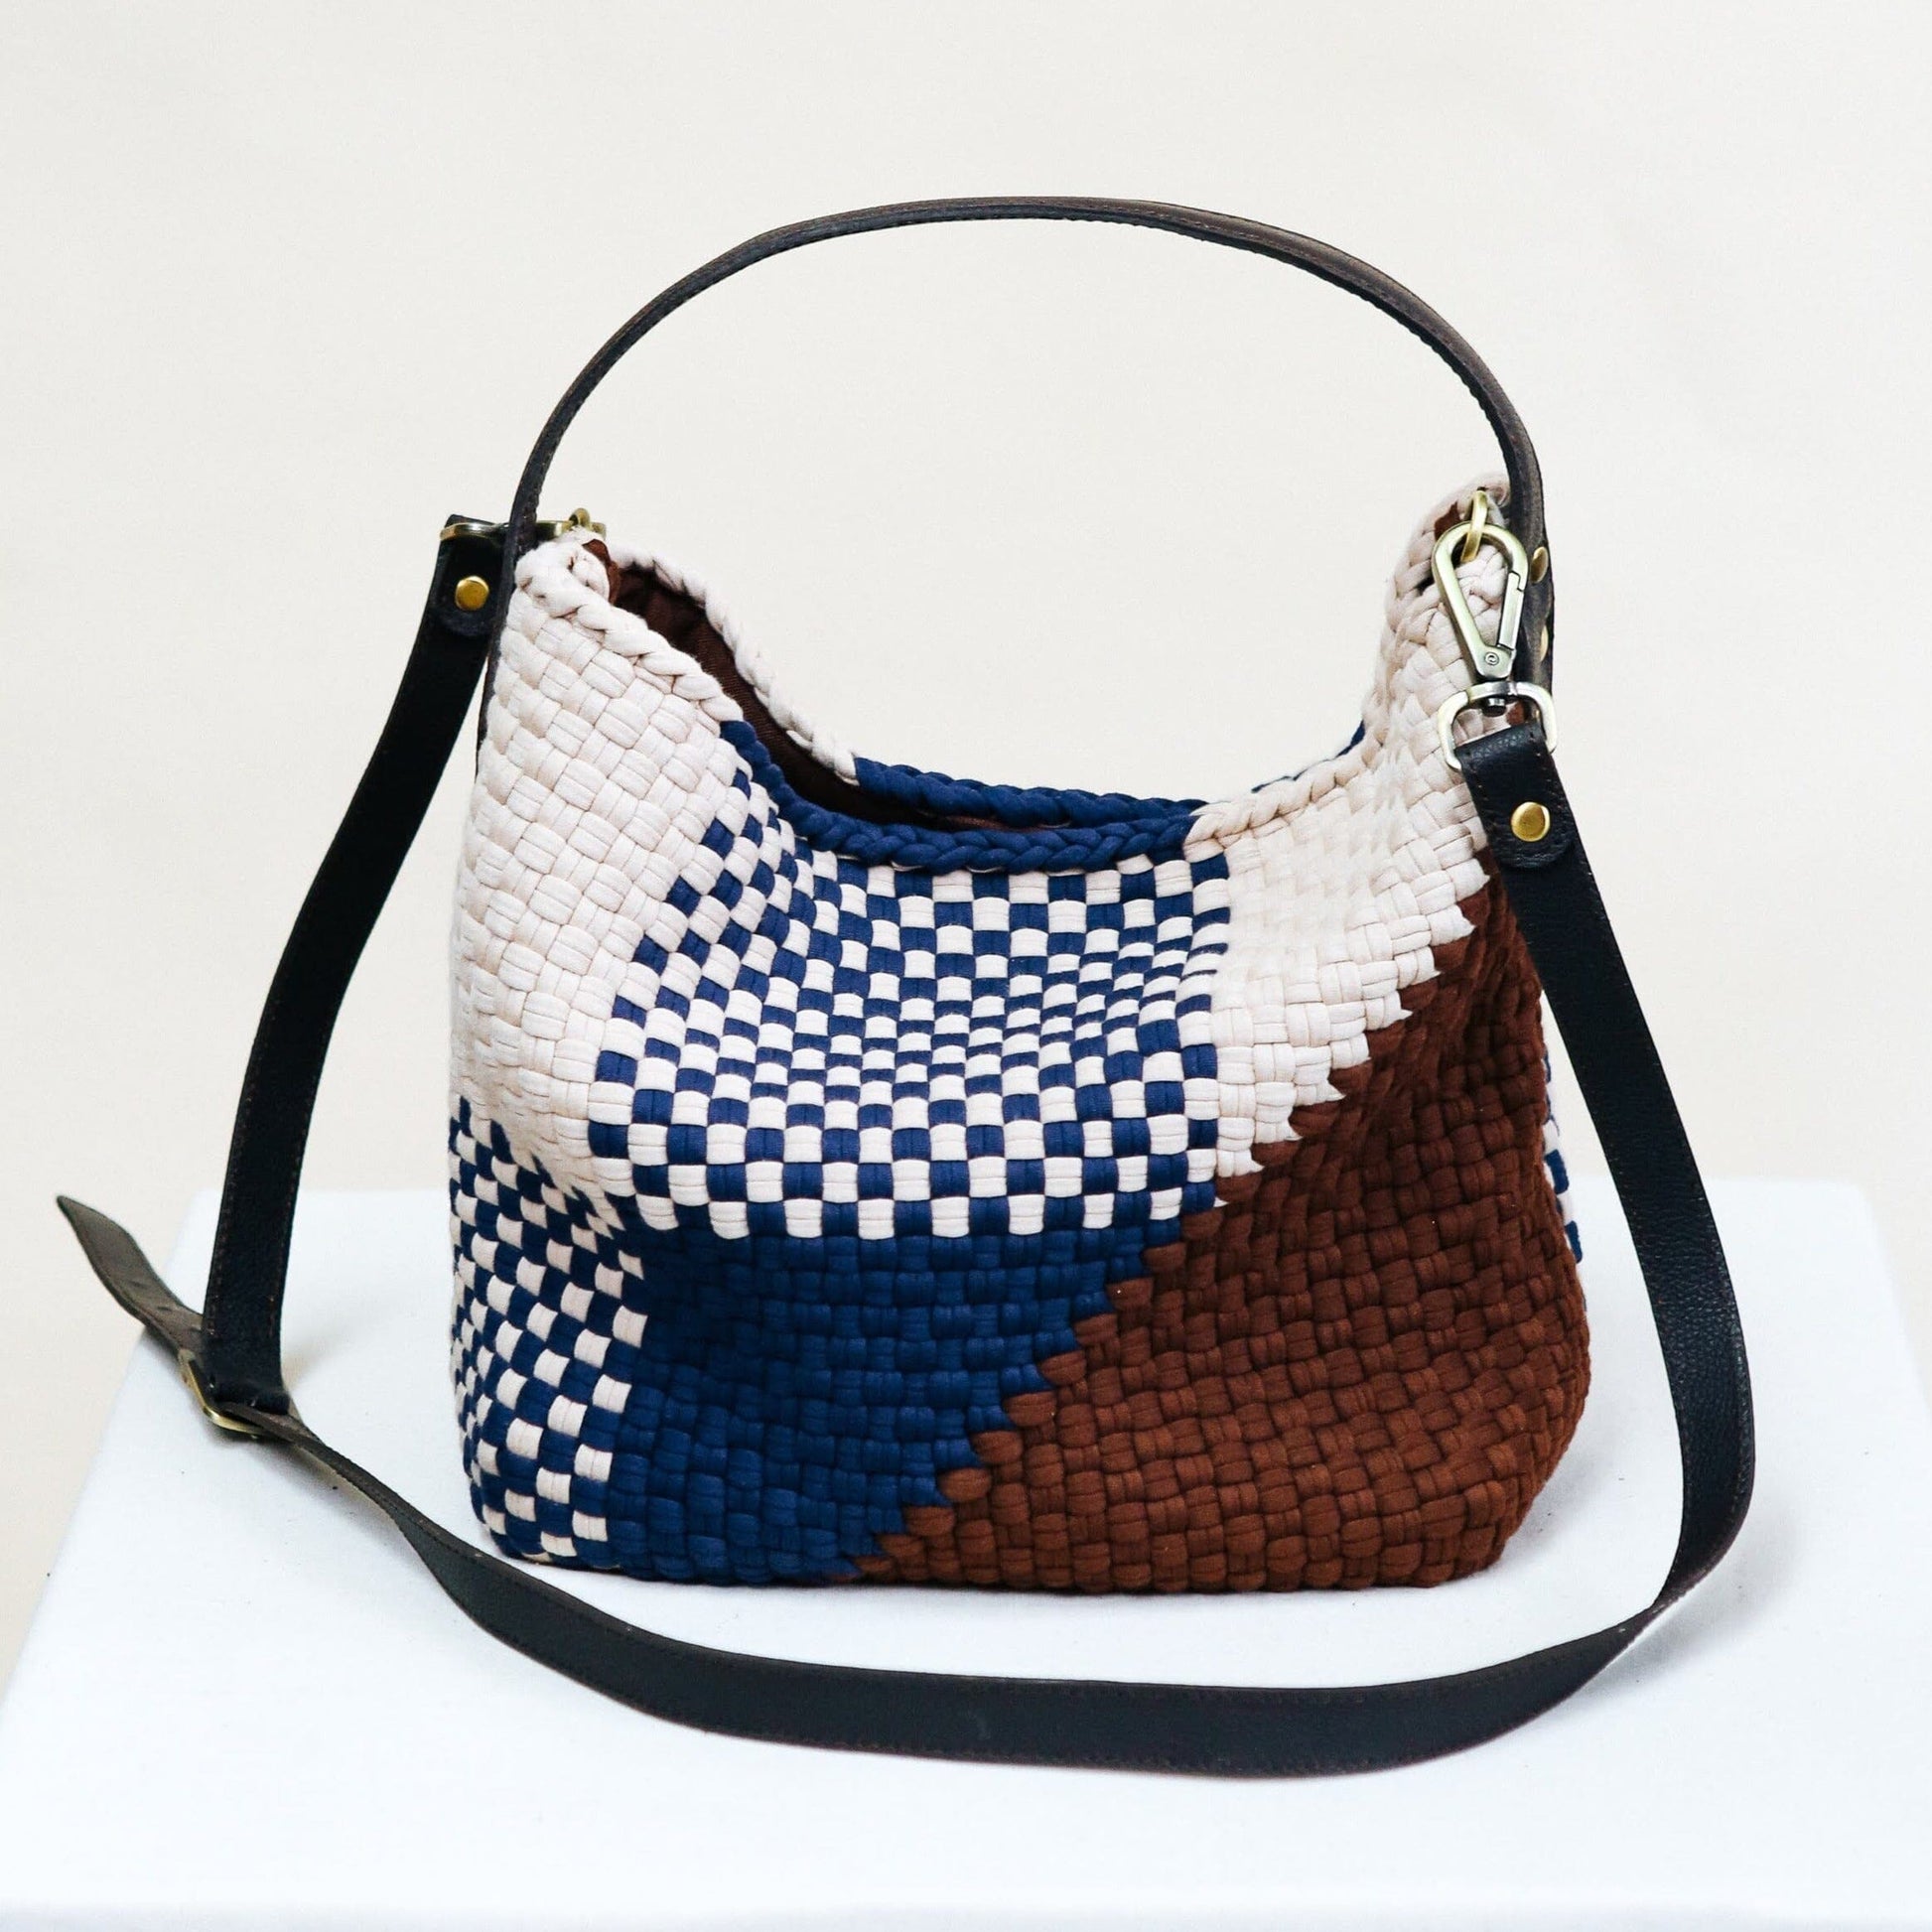 Buslo Mini Diagonal Weave - Brown & Navy Fashion Rags2Riches